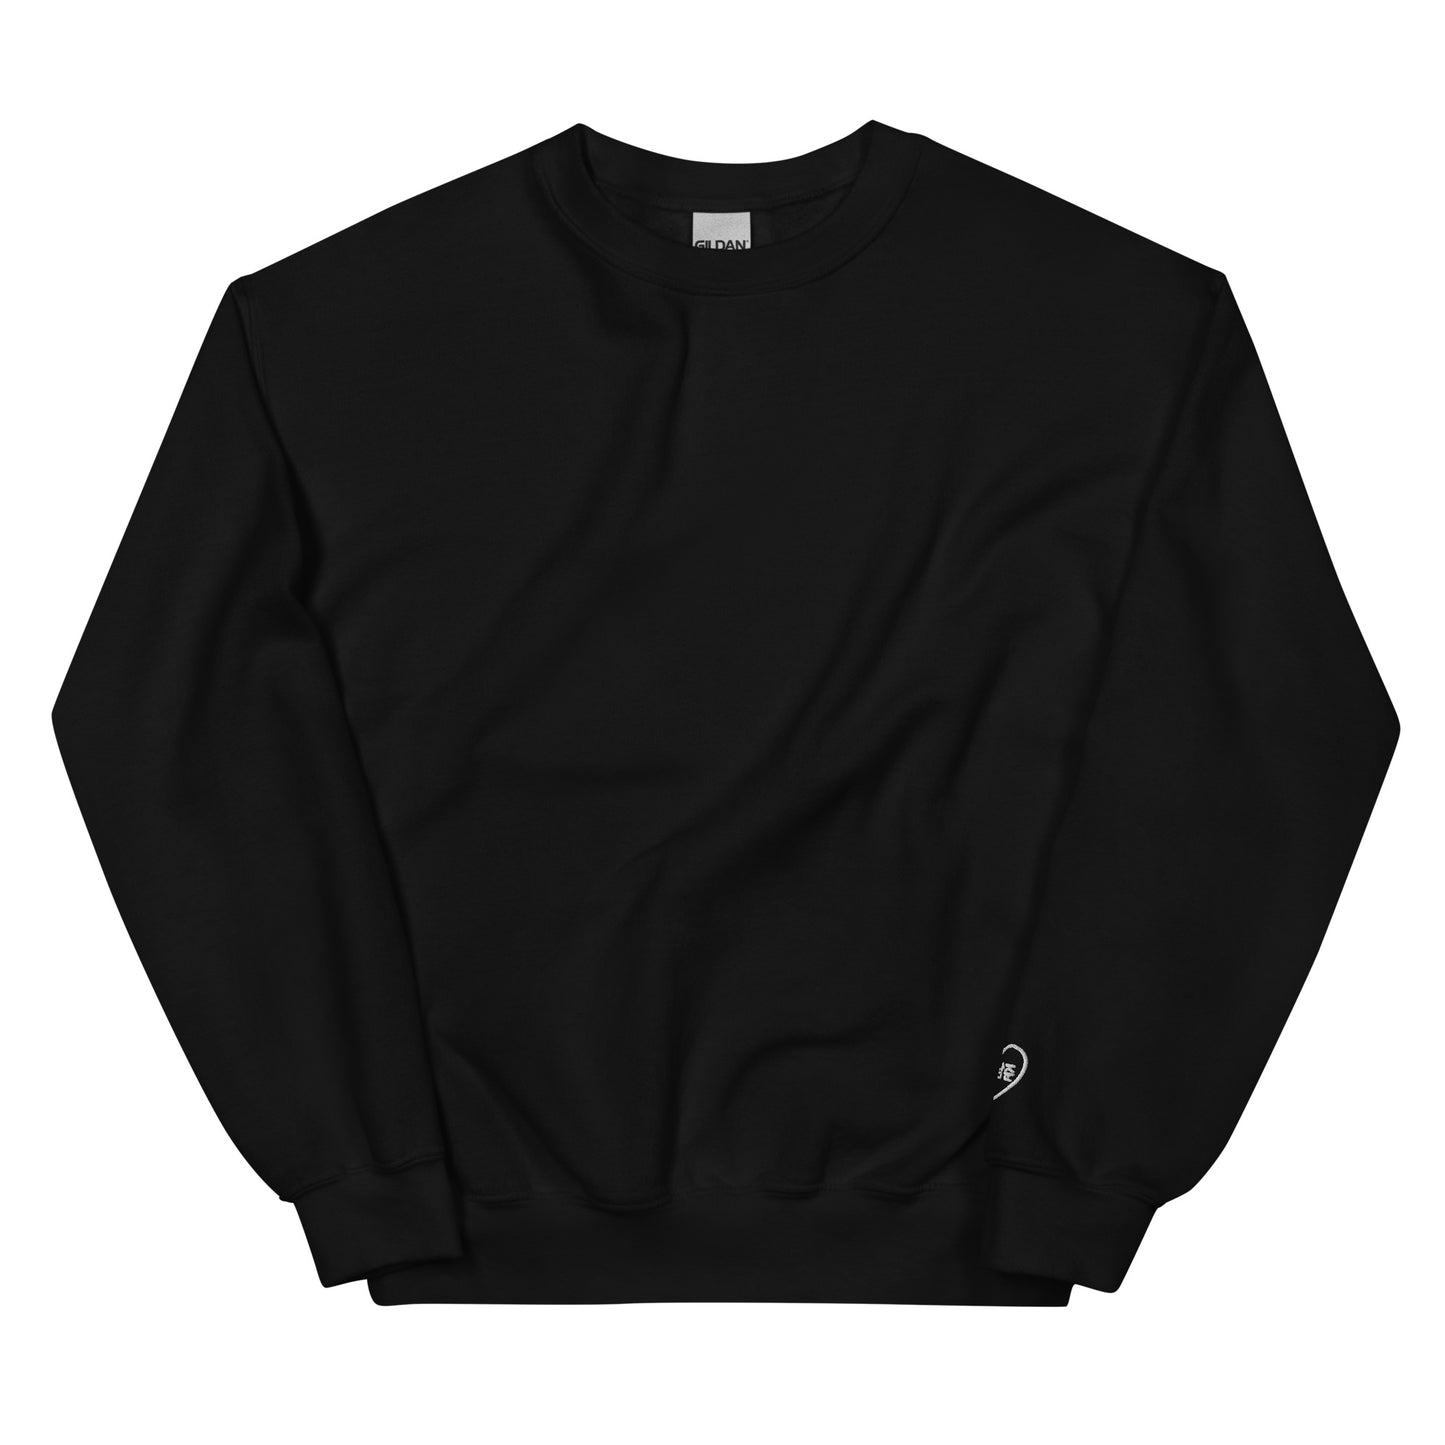 BTS RM, Kim Nam-joon BTS Merch Embroidery Unisex Sweatshirt